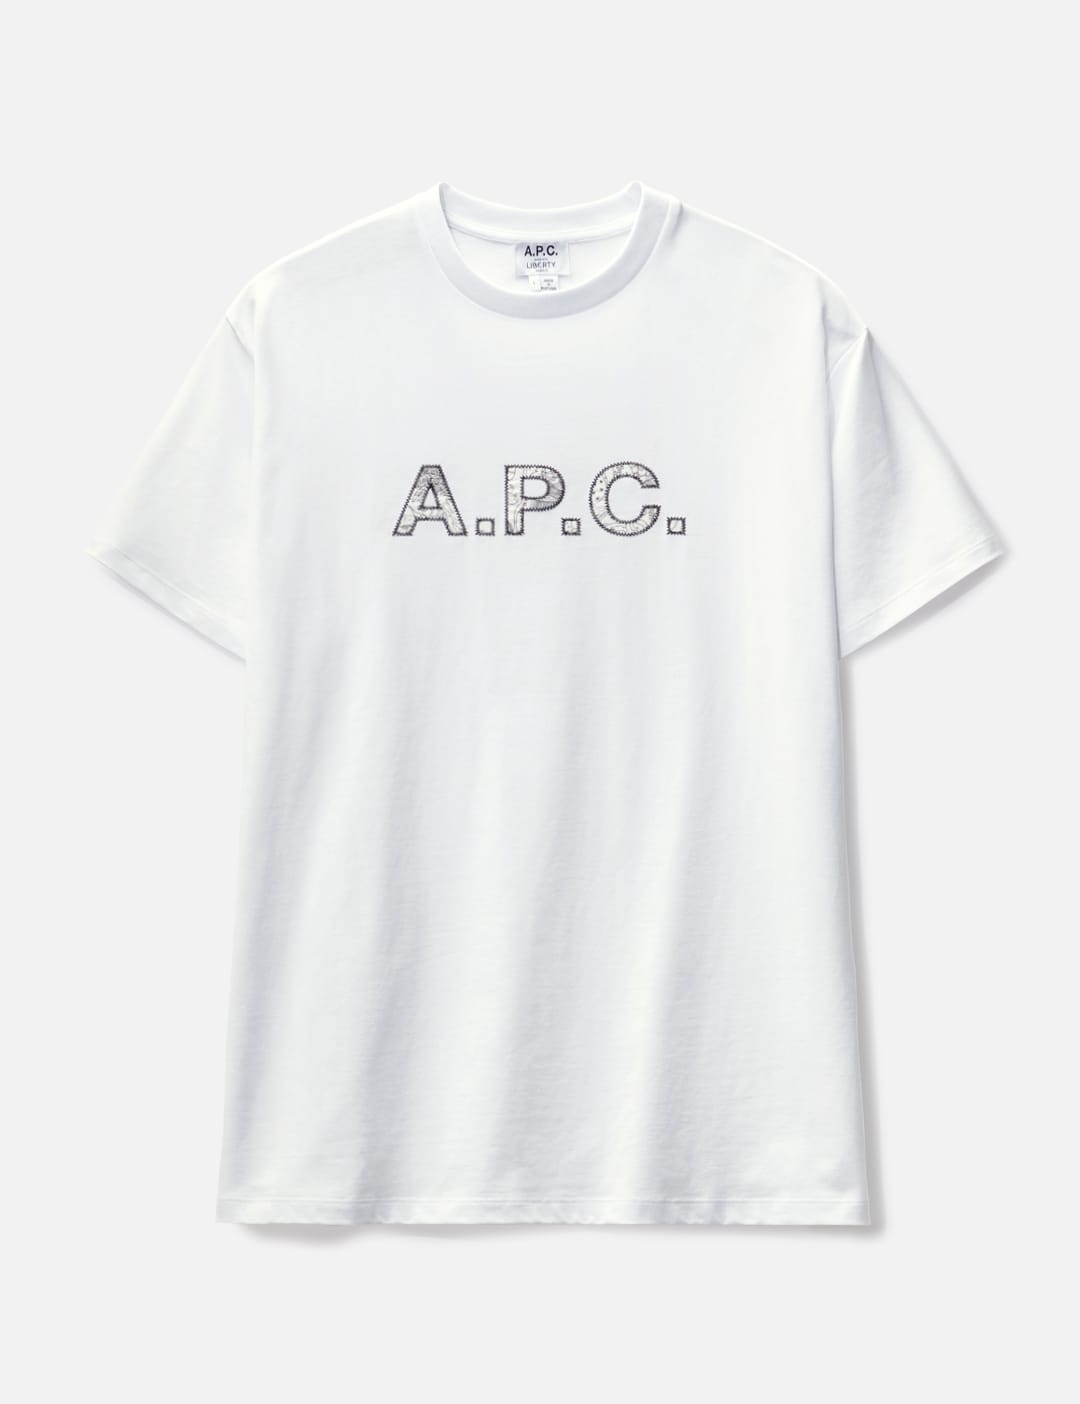 A.P.C. x Liberty Fabrics Dragon T-shirt